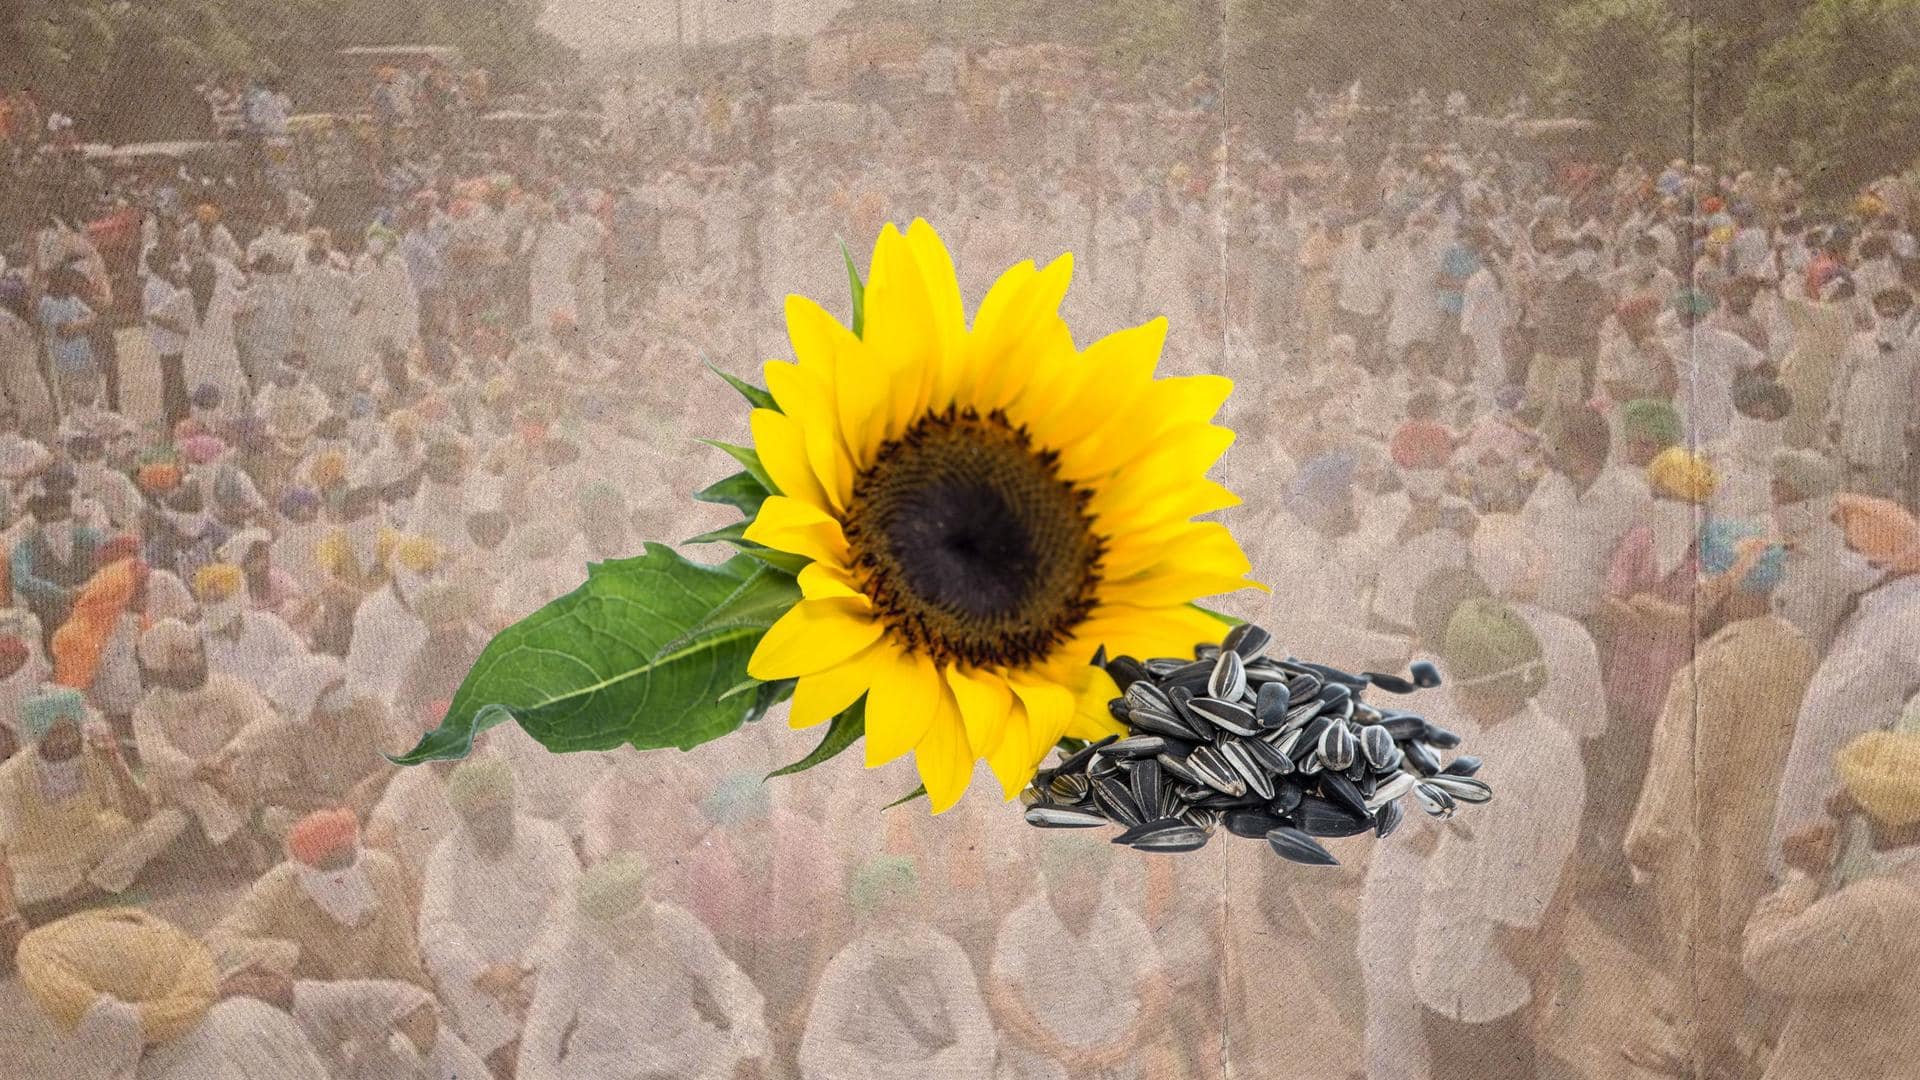 Haryana farmers demanding MSP on sunflower seeds block Delhi-Amritsar highway